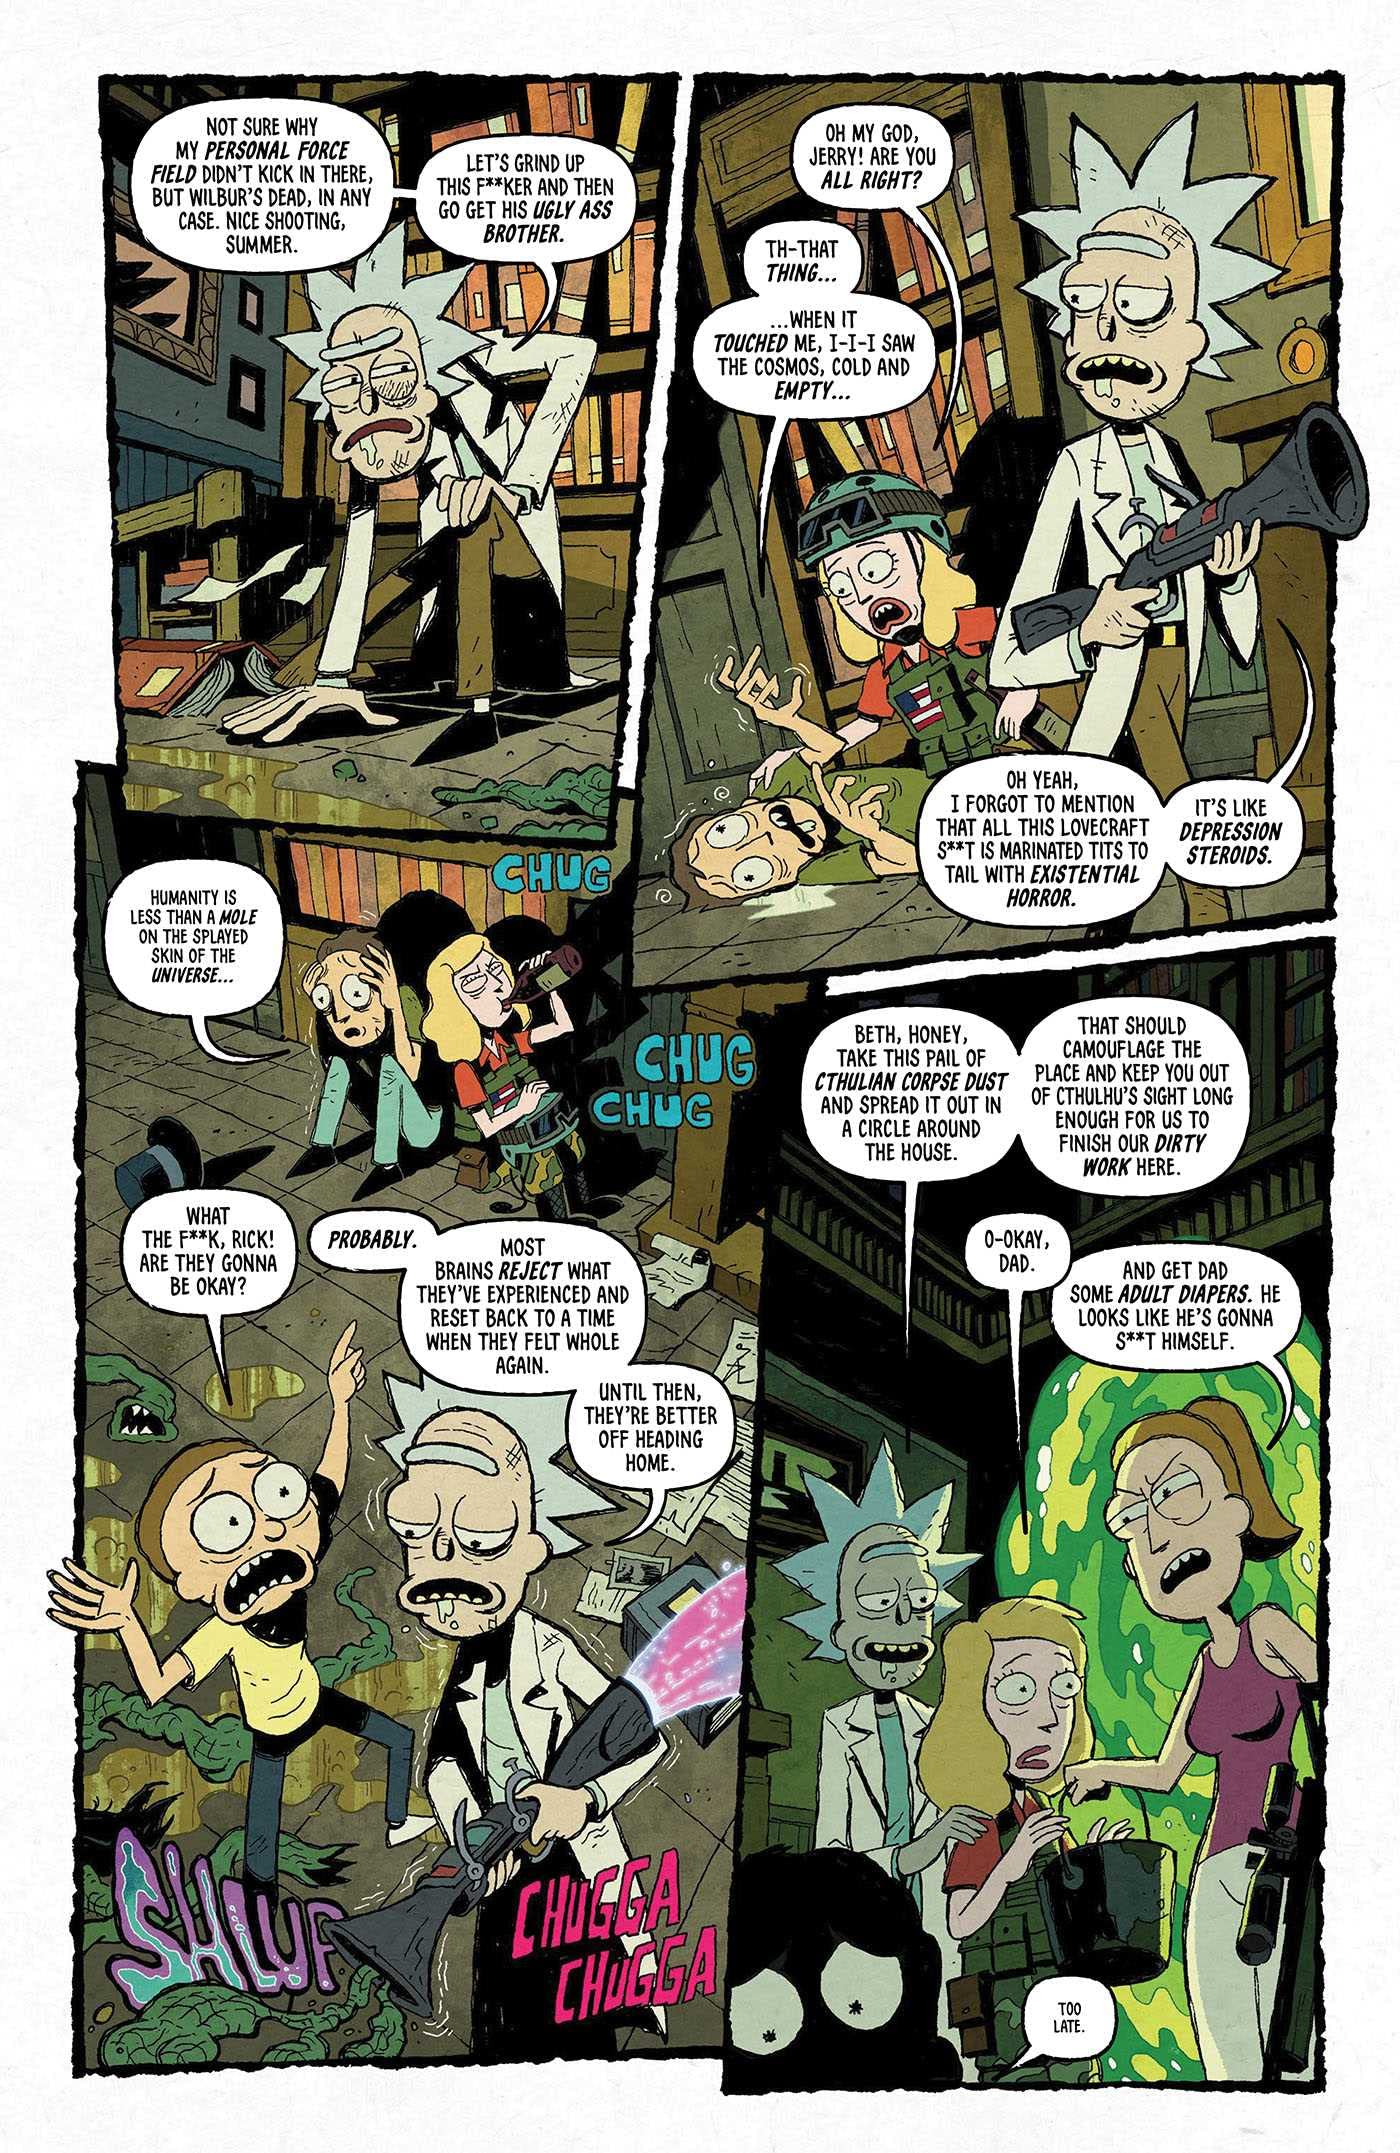 Rick and Morty: vs. Cthulhu